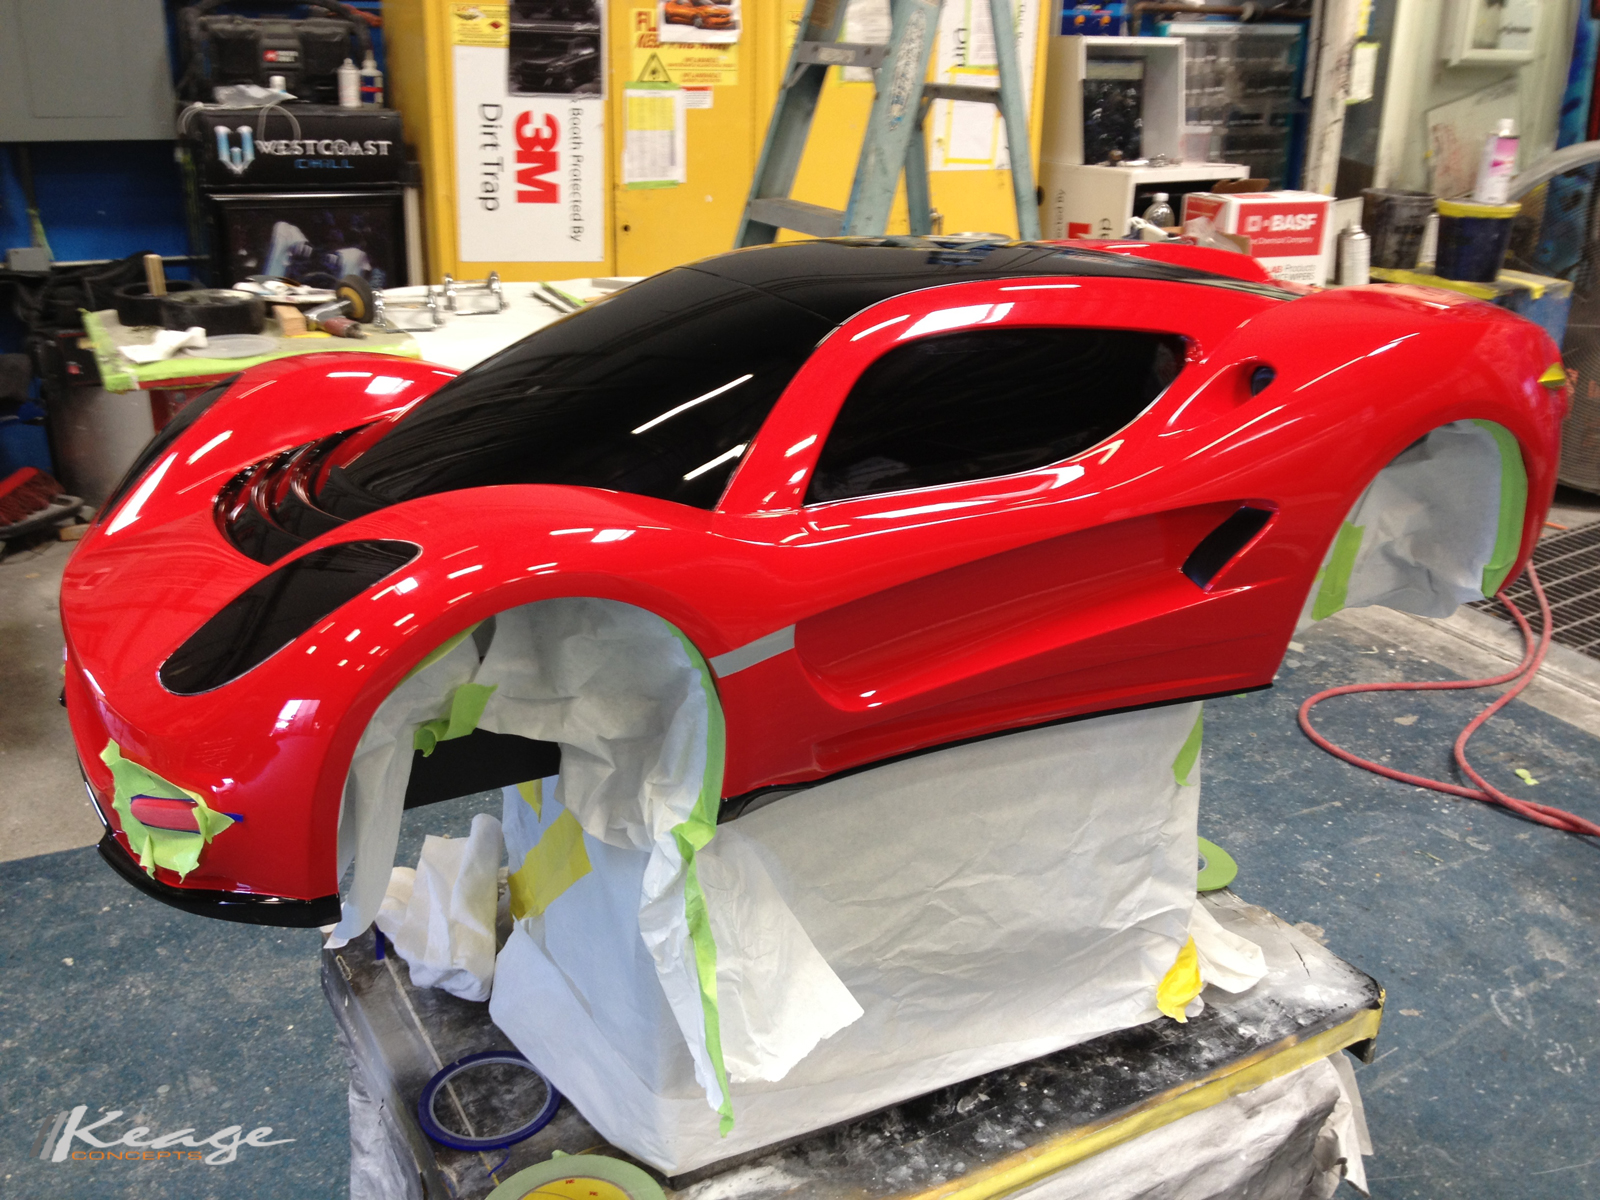 Will.i.am WCC Custom Tesla Keage Concepts Calgary Alberta Automotive Design